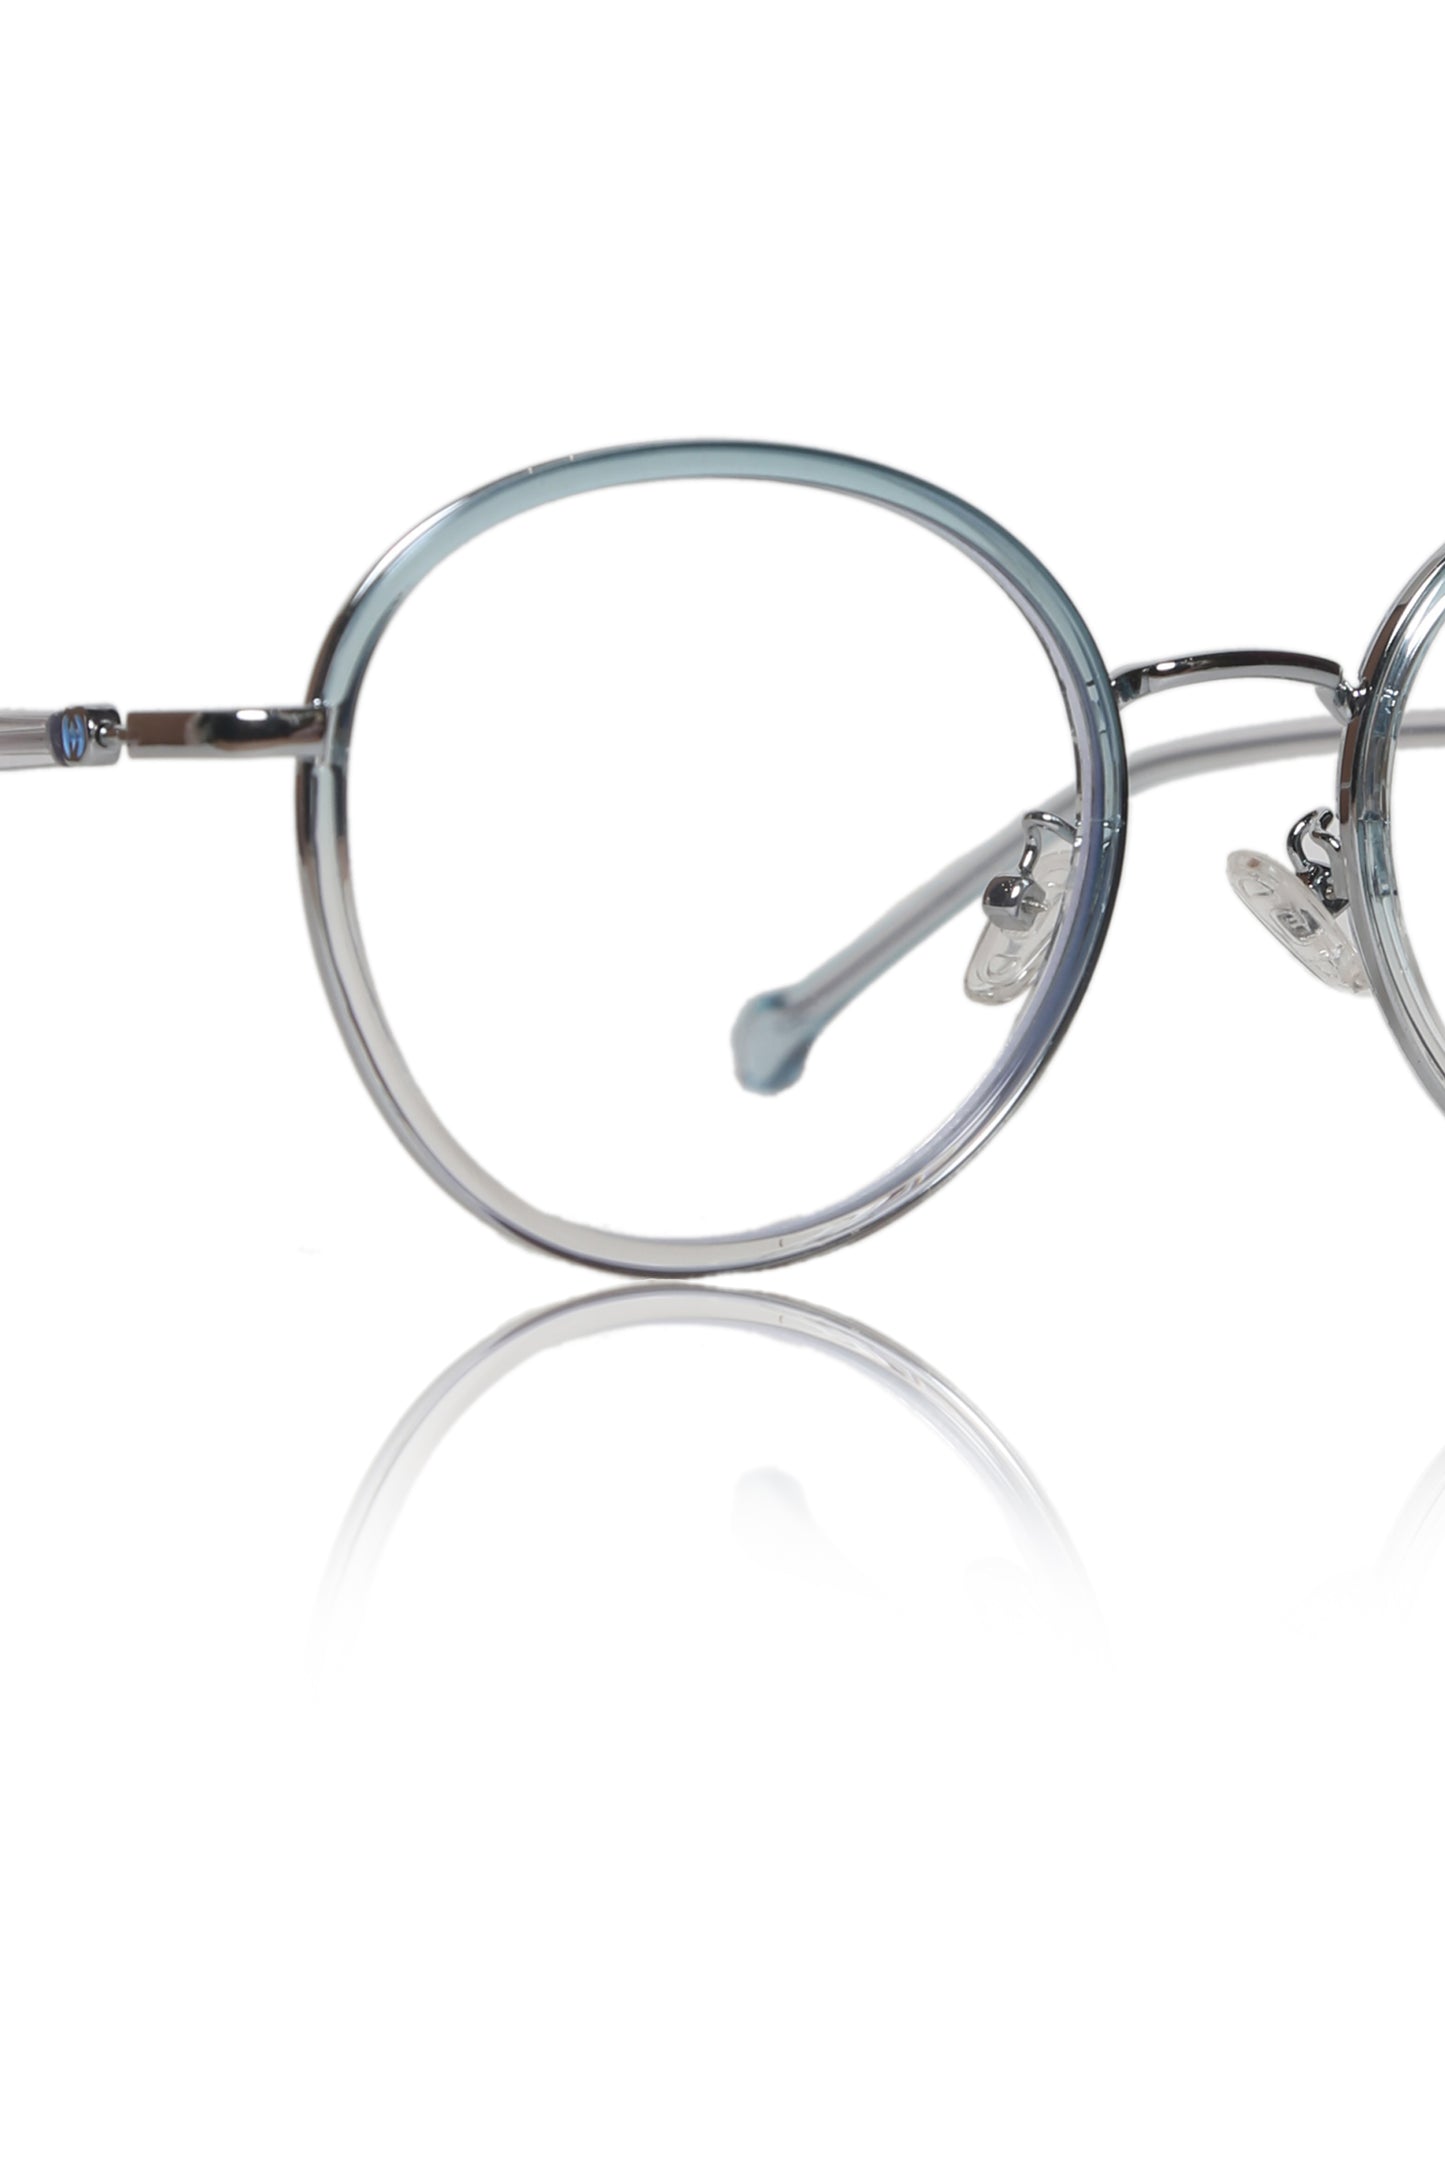 Jodykoes® Premium Series Round Eyewear Eyeglasses Spectacles Frame for Men and Women (Aqua)